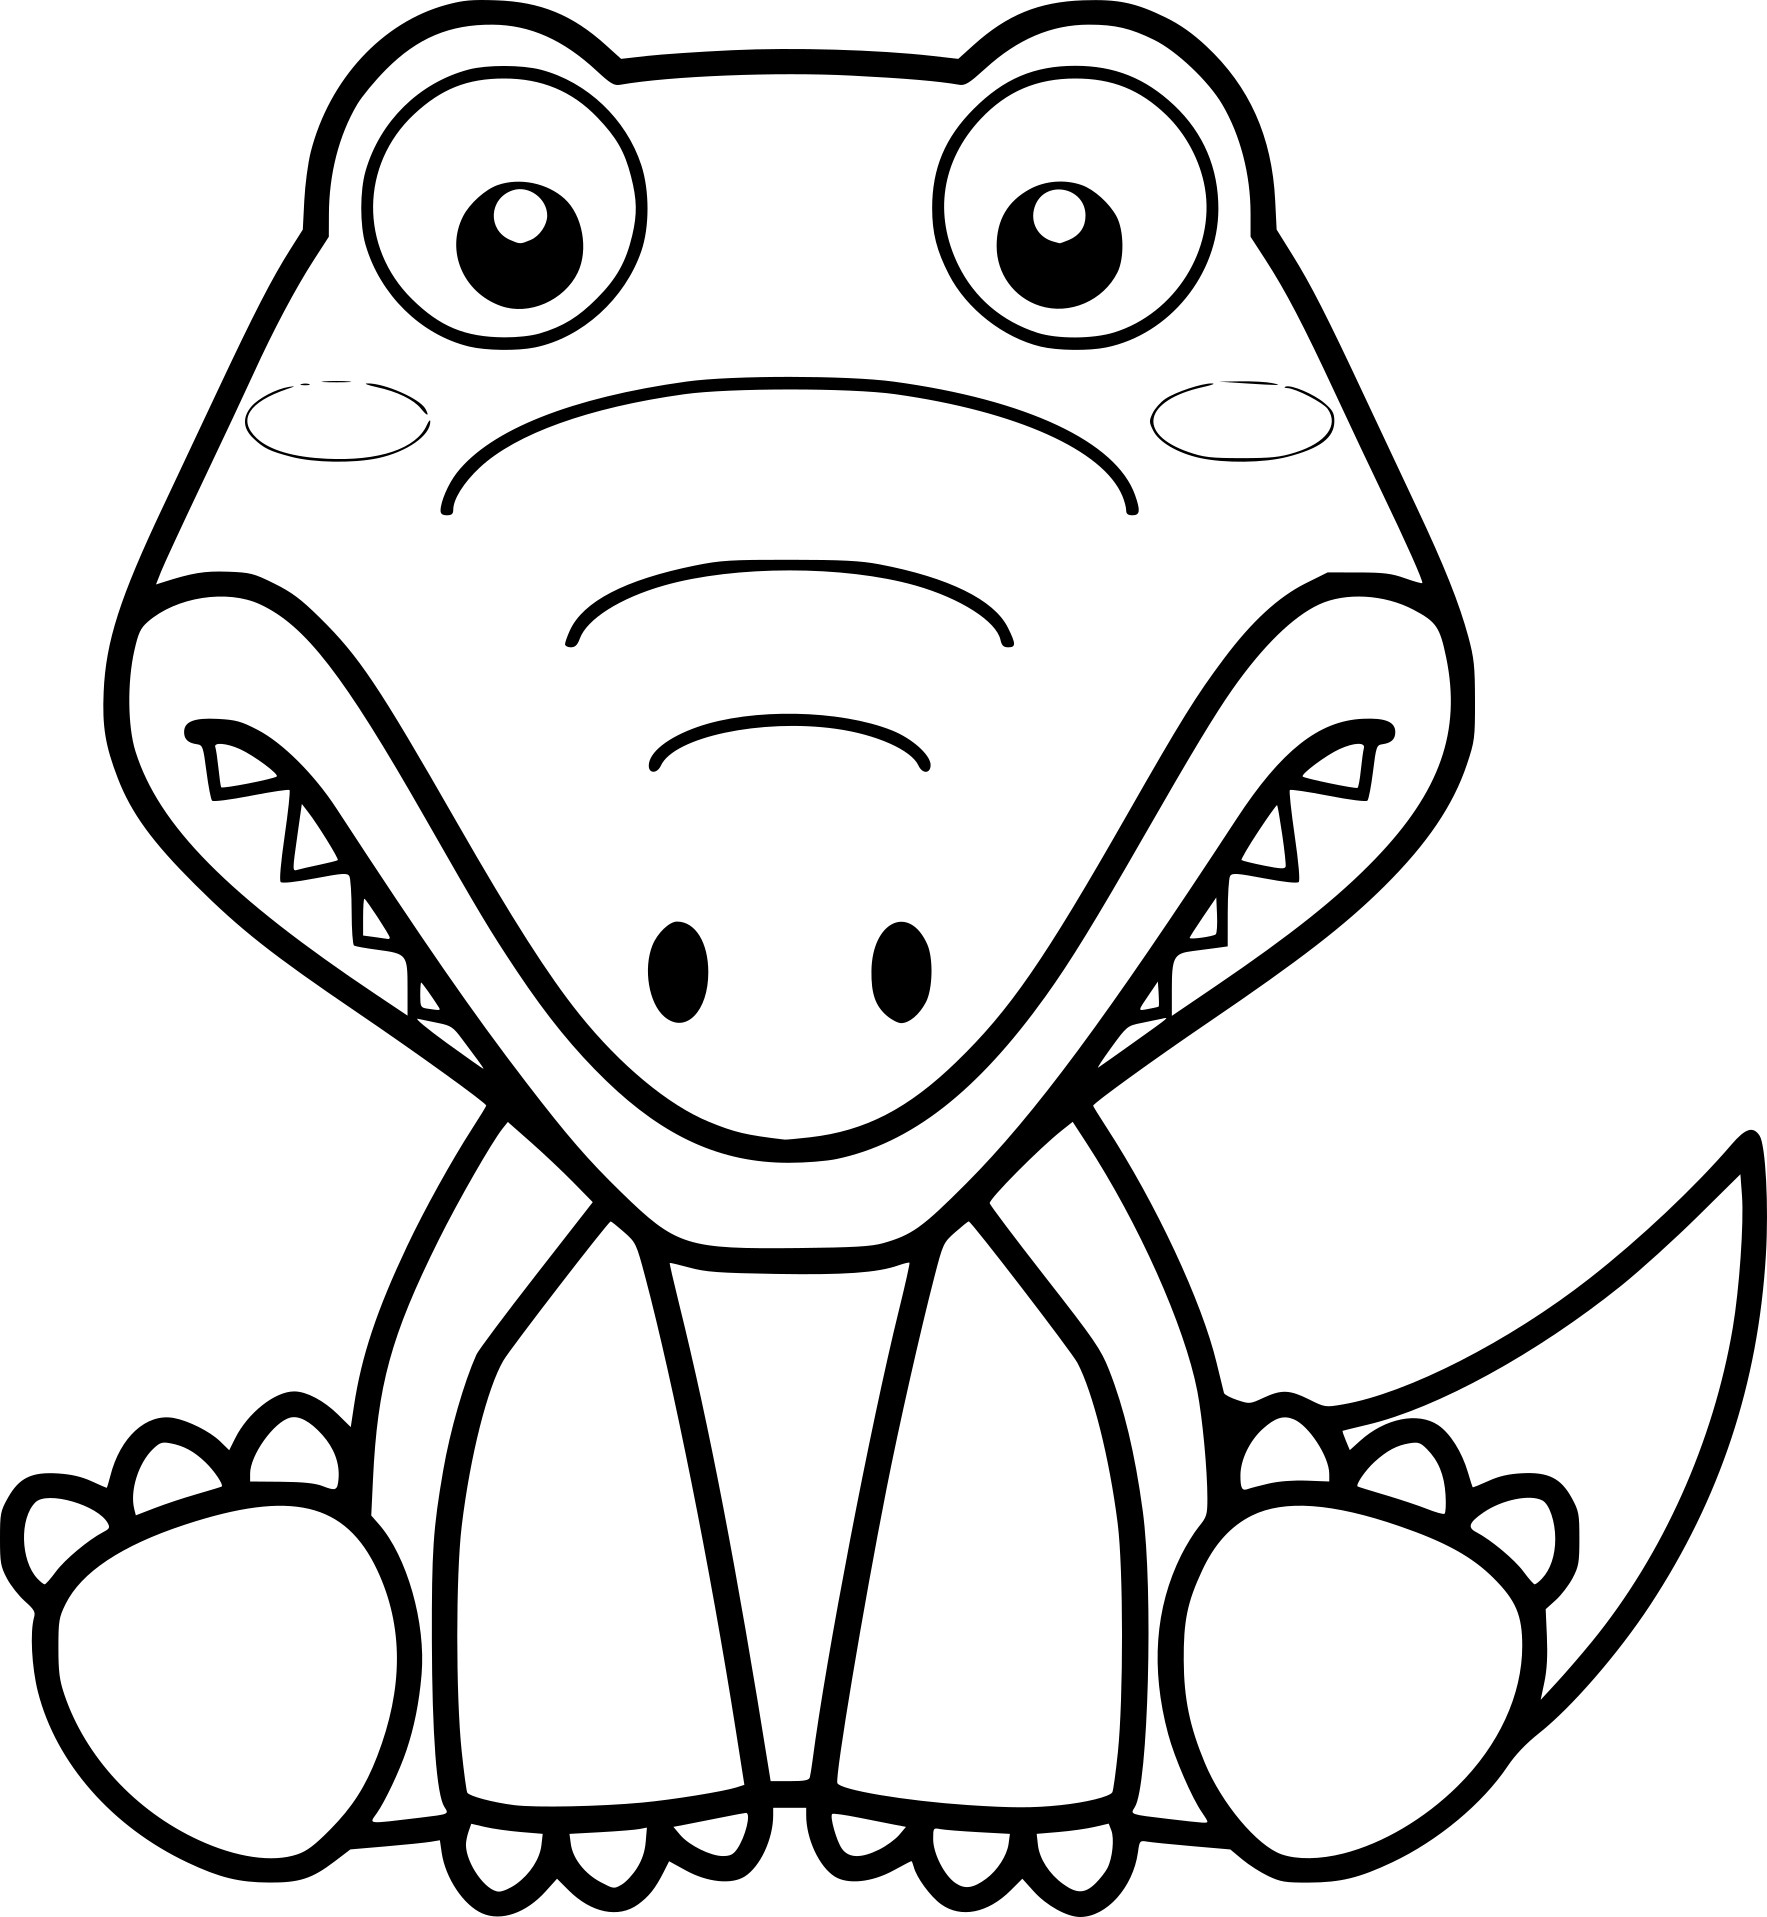 Baby Crocodile coloring page